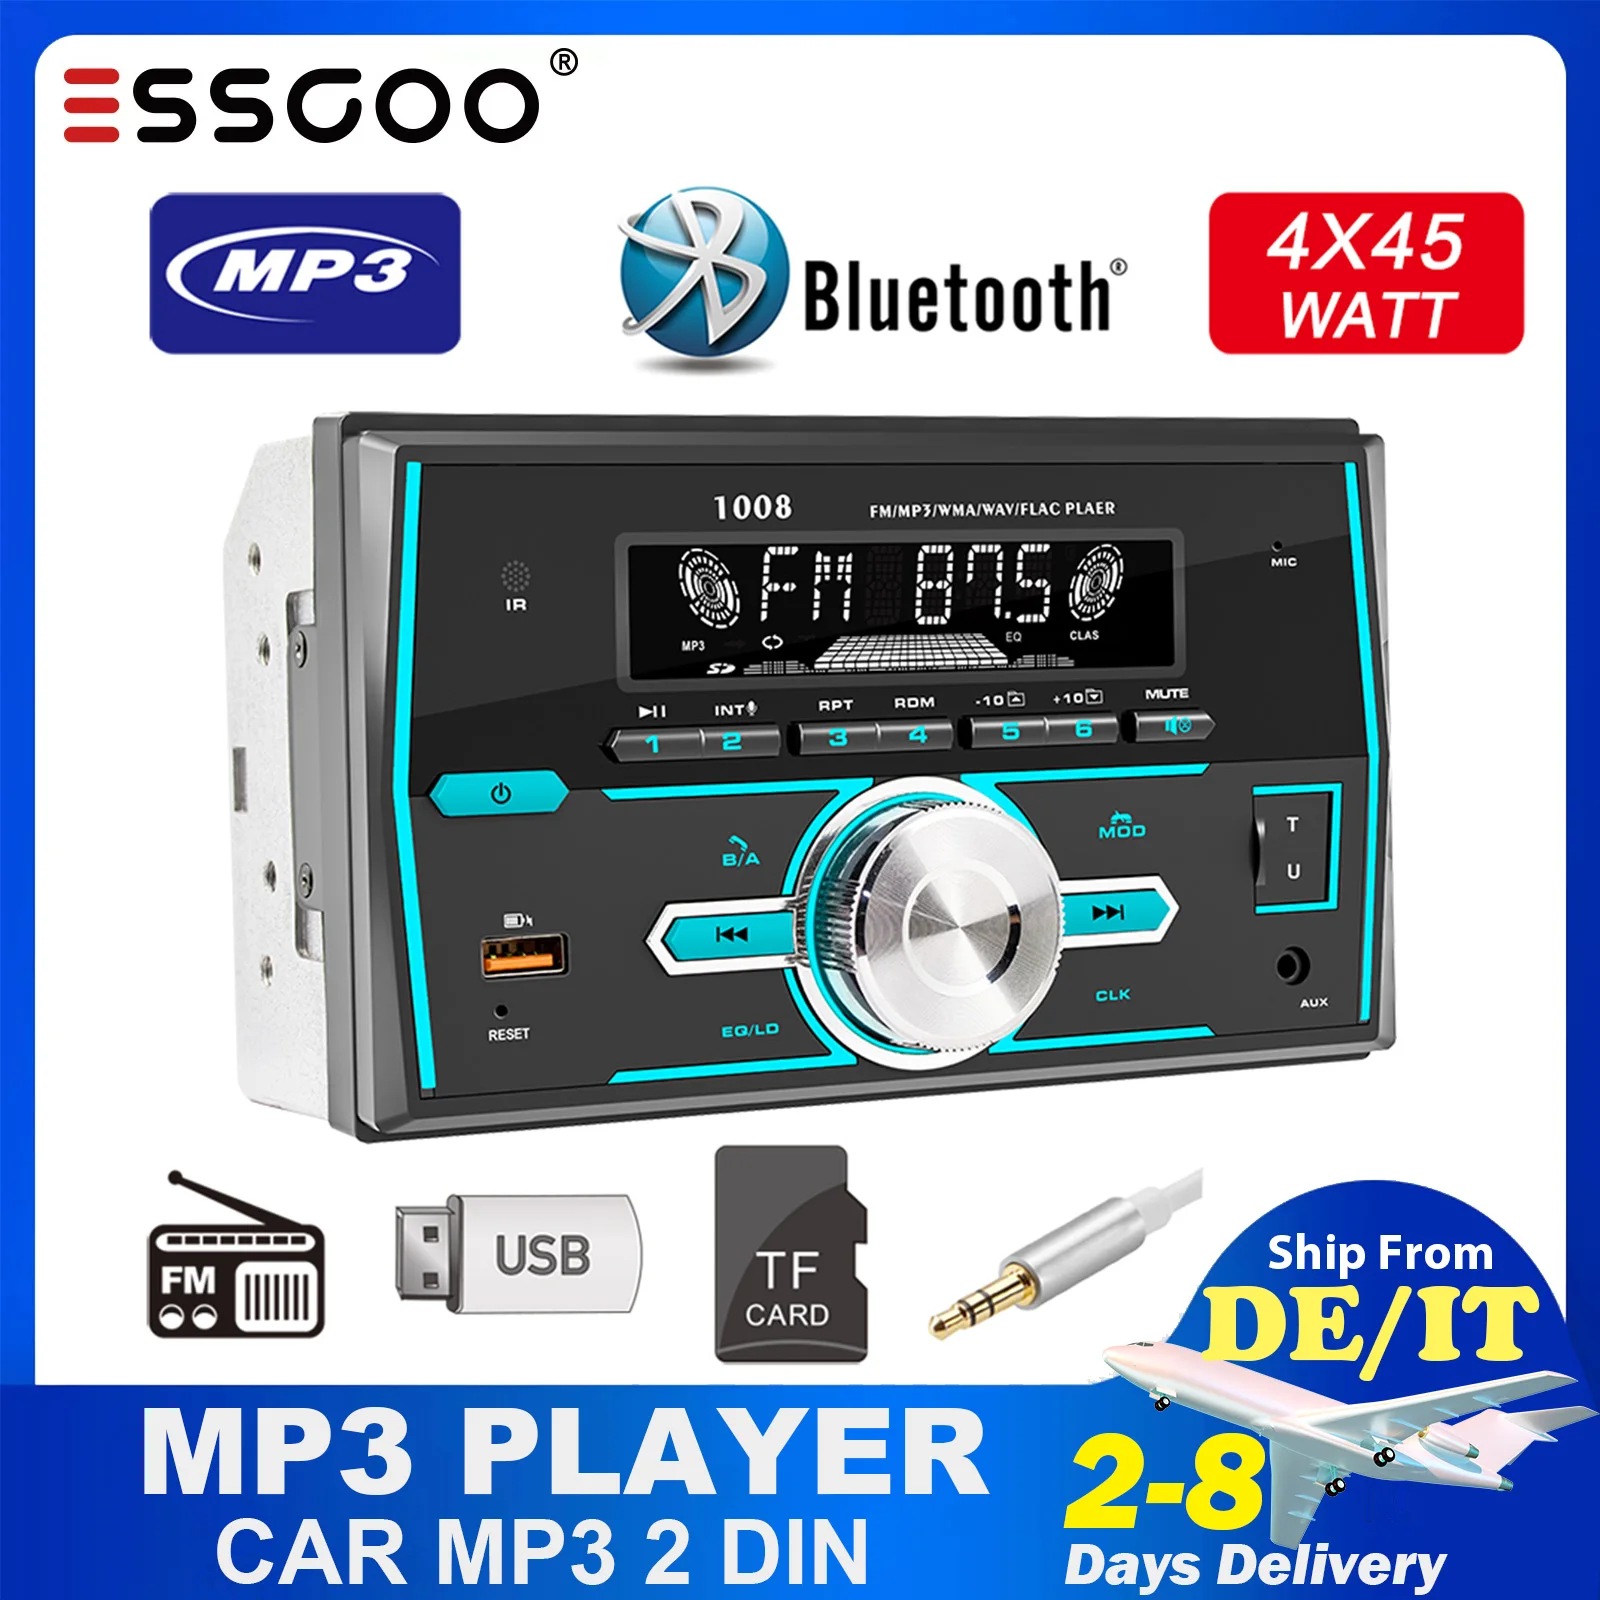 

ESSGOO 2 Din Car MP3 Player Dual BT 5.1 Voice Assistant TF FM AUX USB Charging Car Autoradio Phone App Locate Find the Car